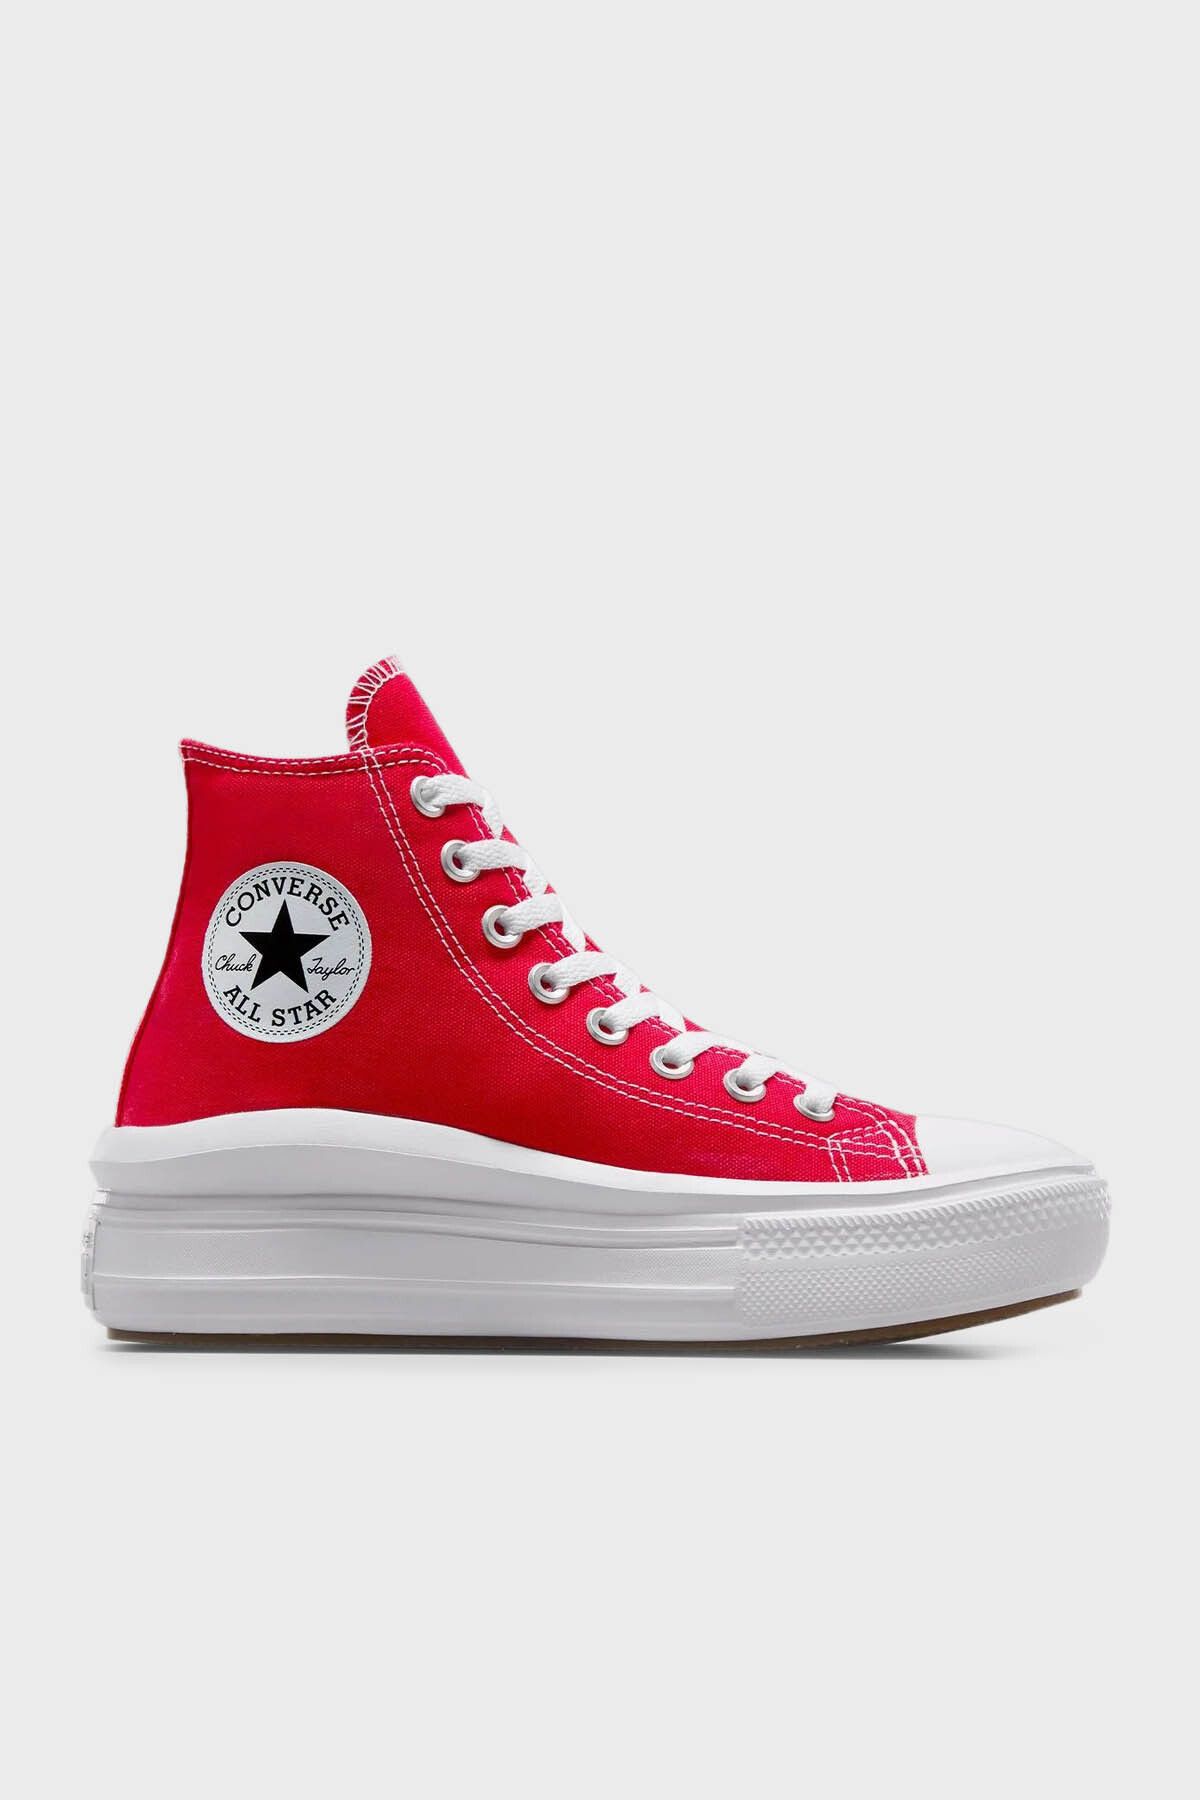 Converse Chuck Taylor All Star Platform Bilekli Sneaker Ayakkabı  AYAKKABI A09073C 600